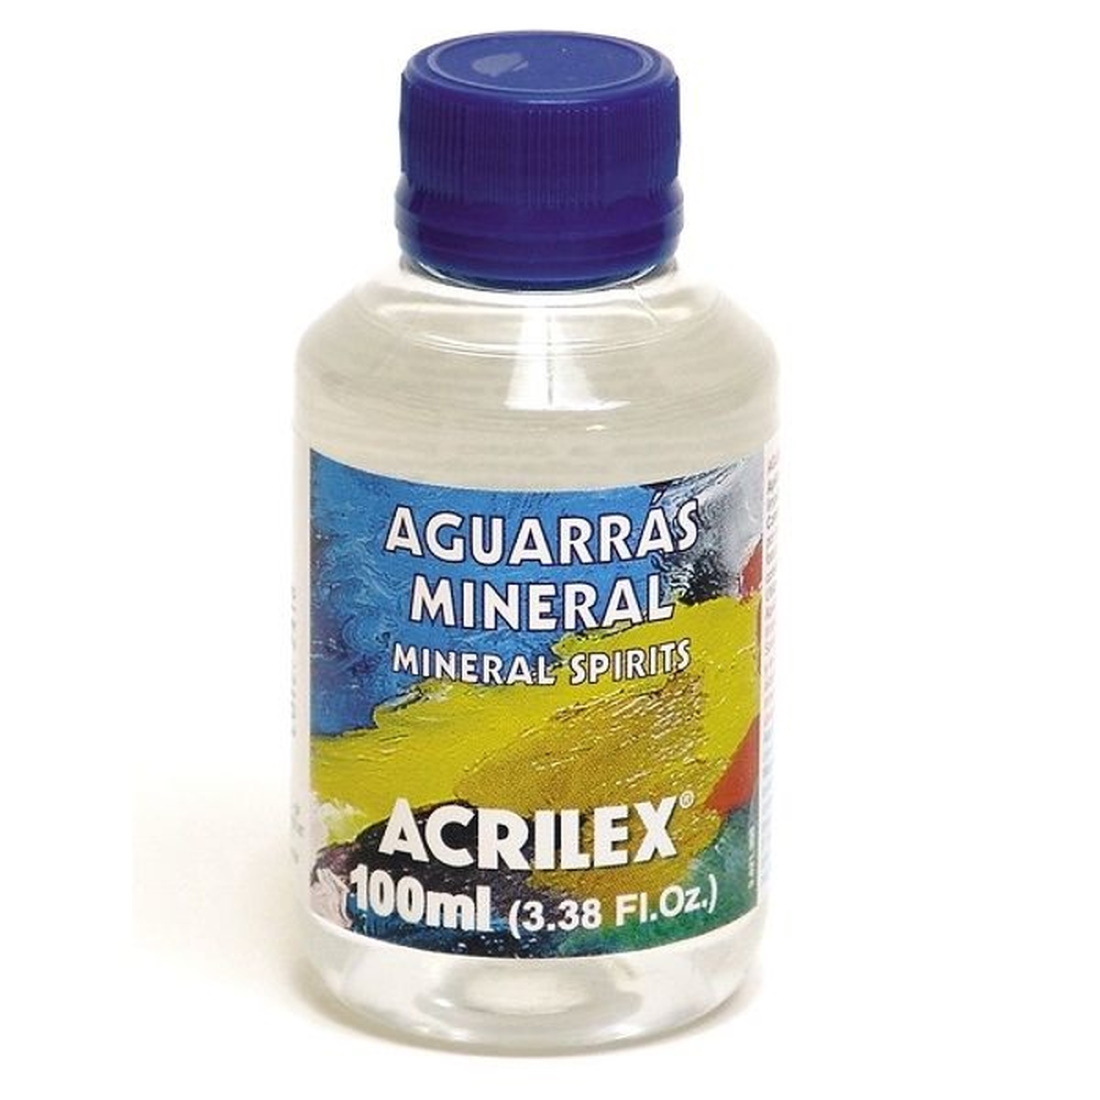 Aguarrás Mineral Acrilex